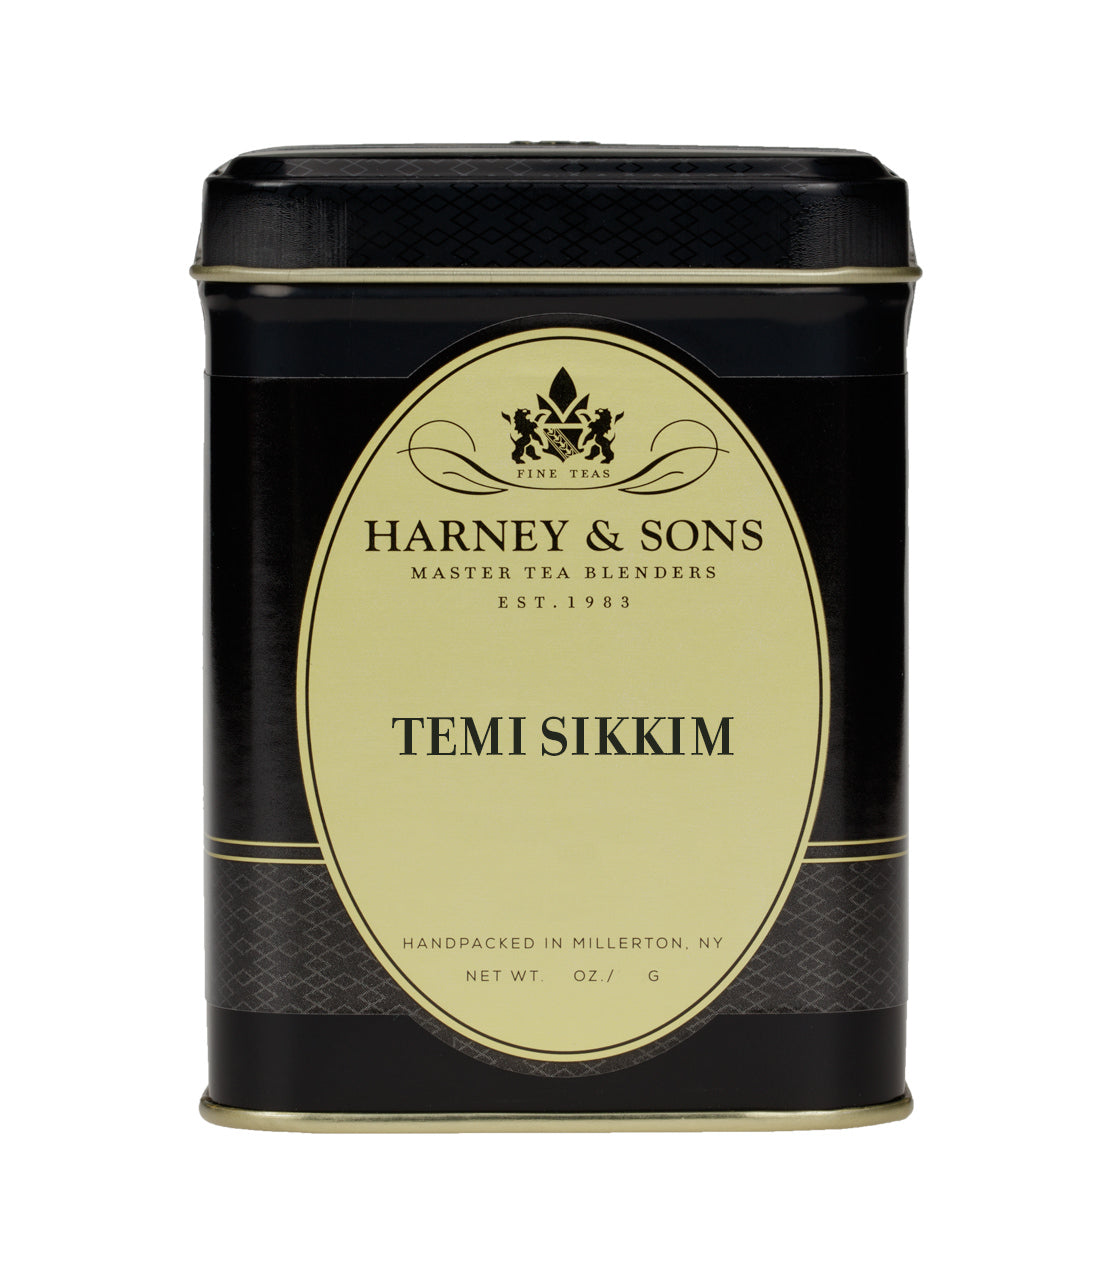 Temi Sikkim - Loose 3 oz. Tin - Harney & Sons Fine Teas